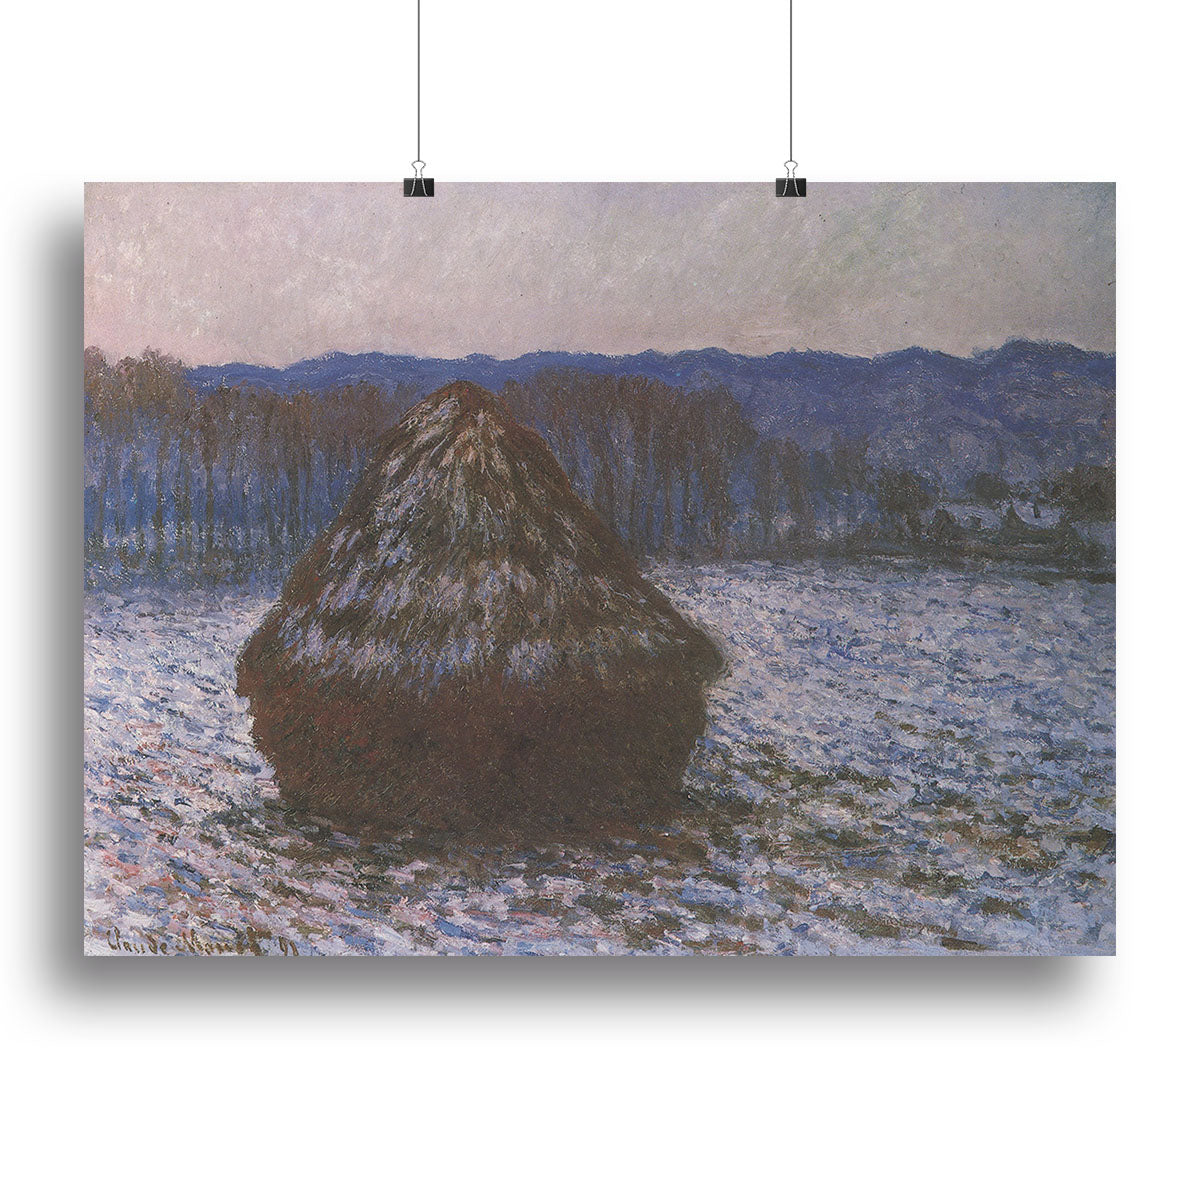 Haystacks 2 by Monet Canvas Print or Poster - Canvas Art Rocks - 2